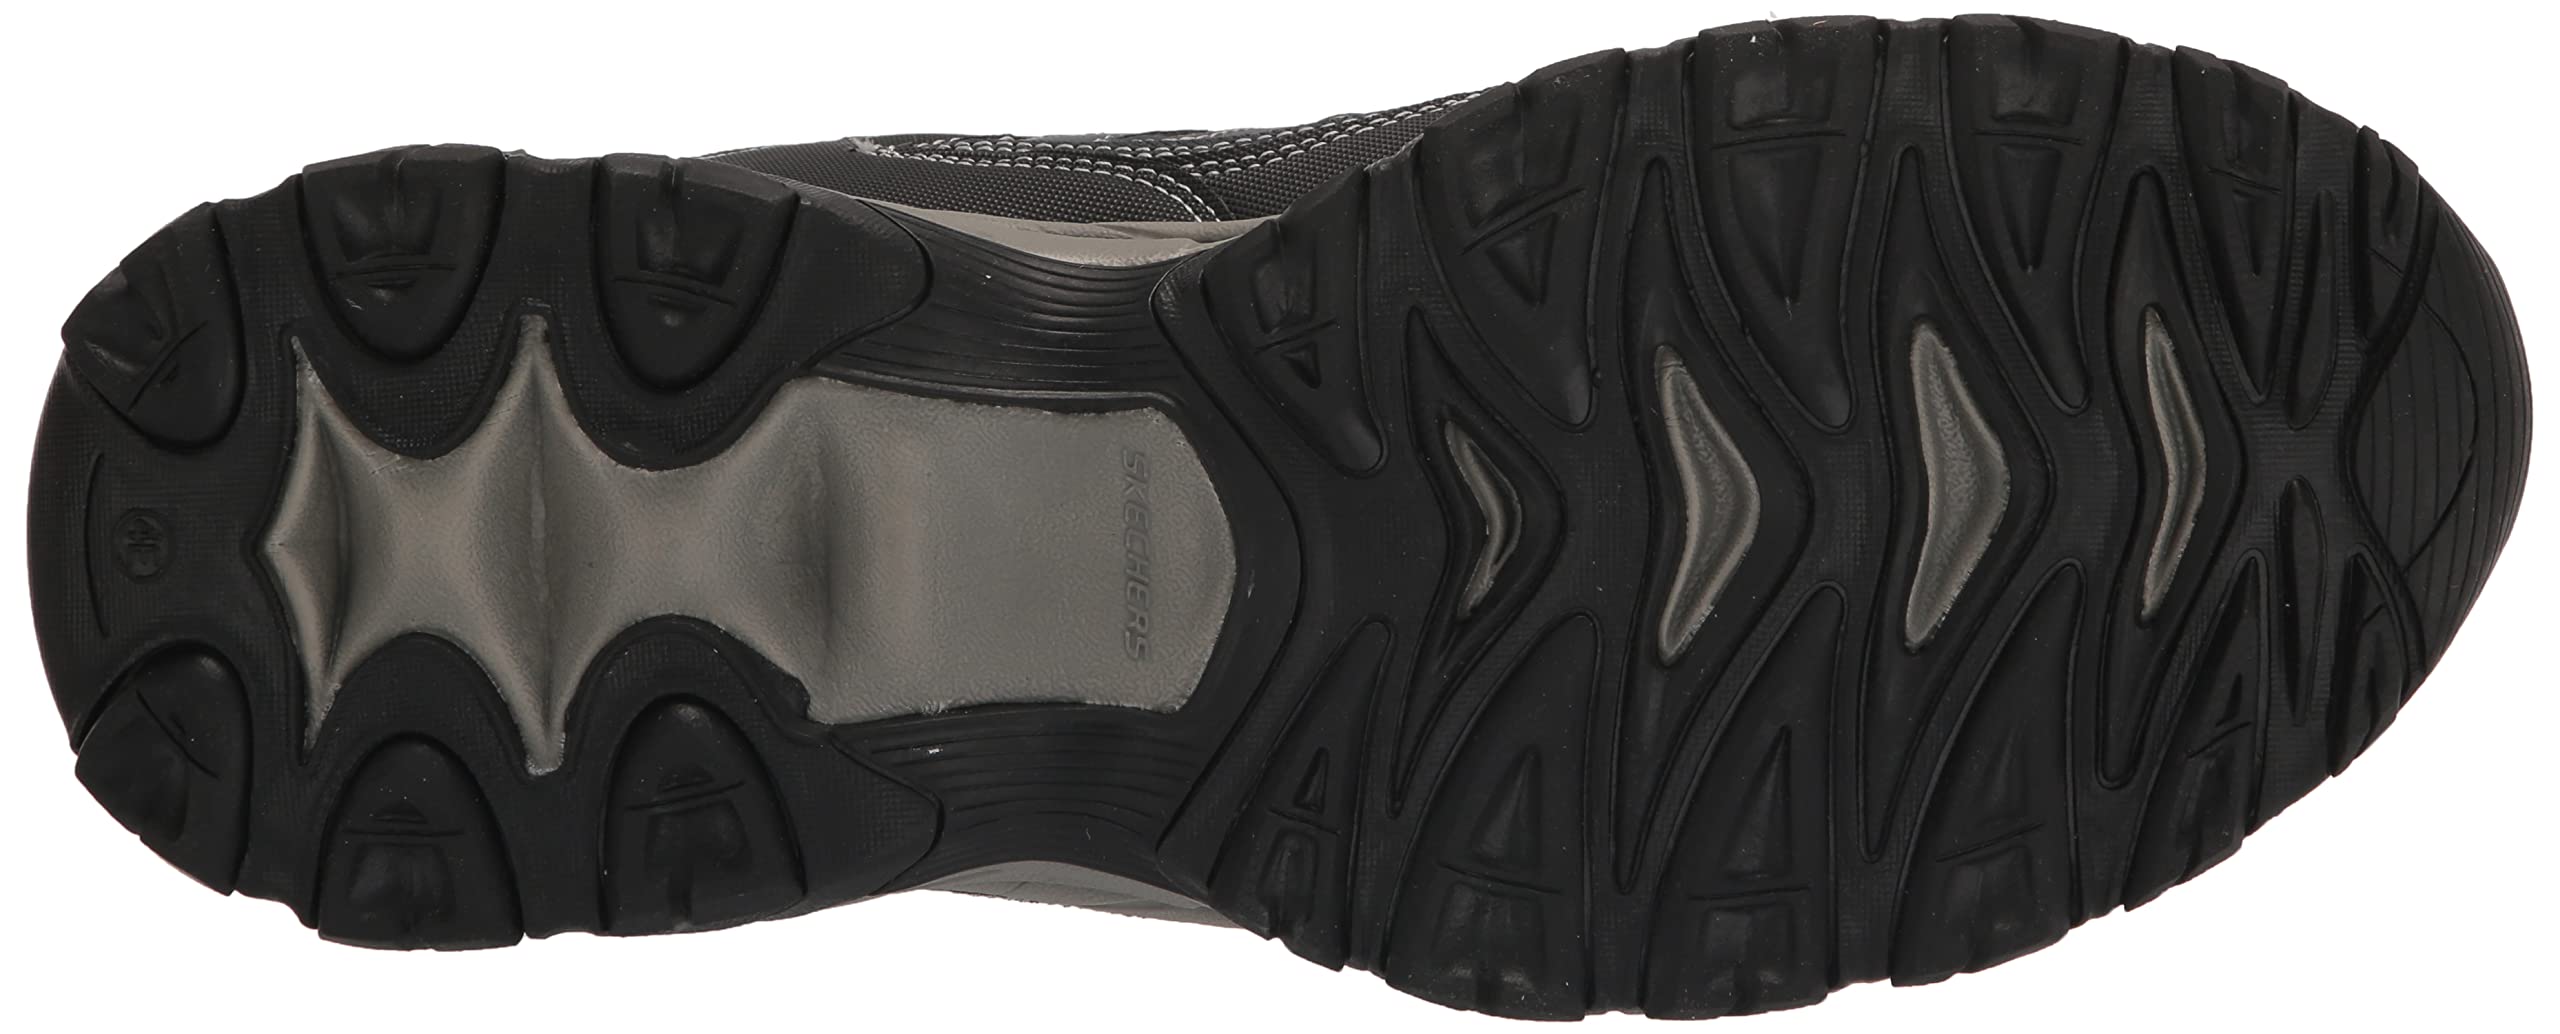 Skechers Men's Cankton Steel Toe Construction Shoe, Navy/Grey, 11